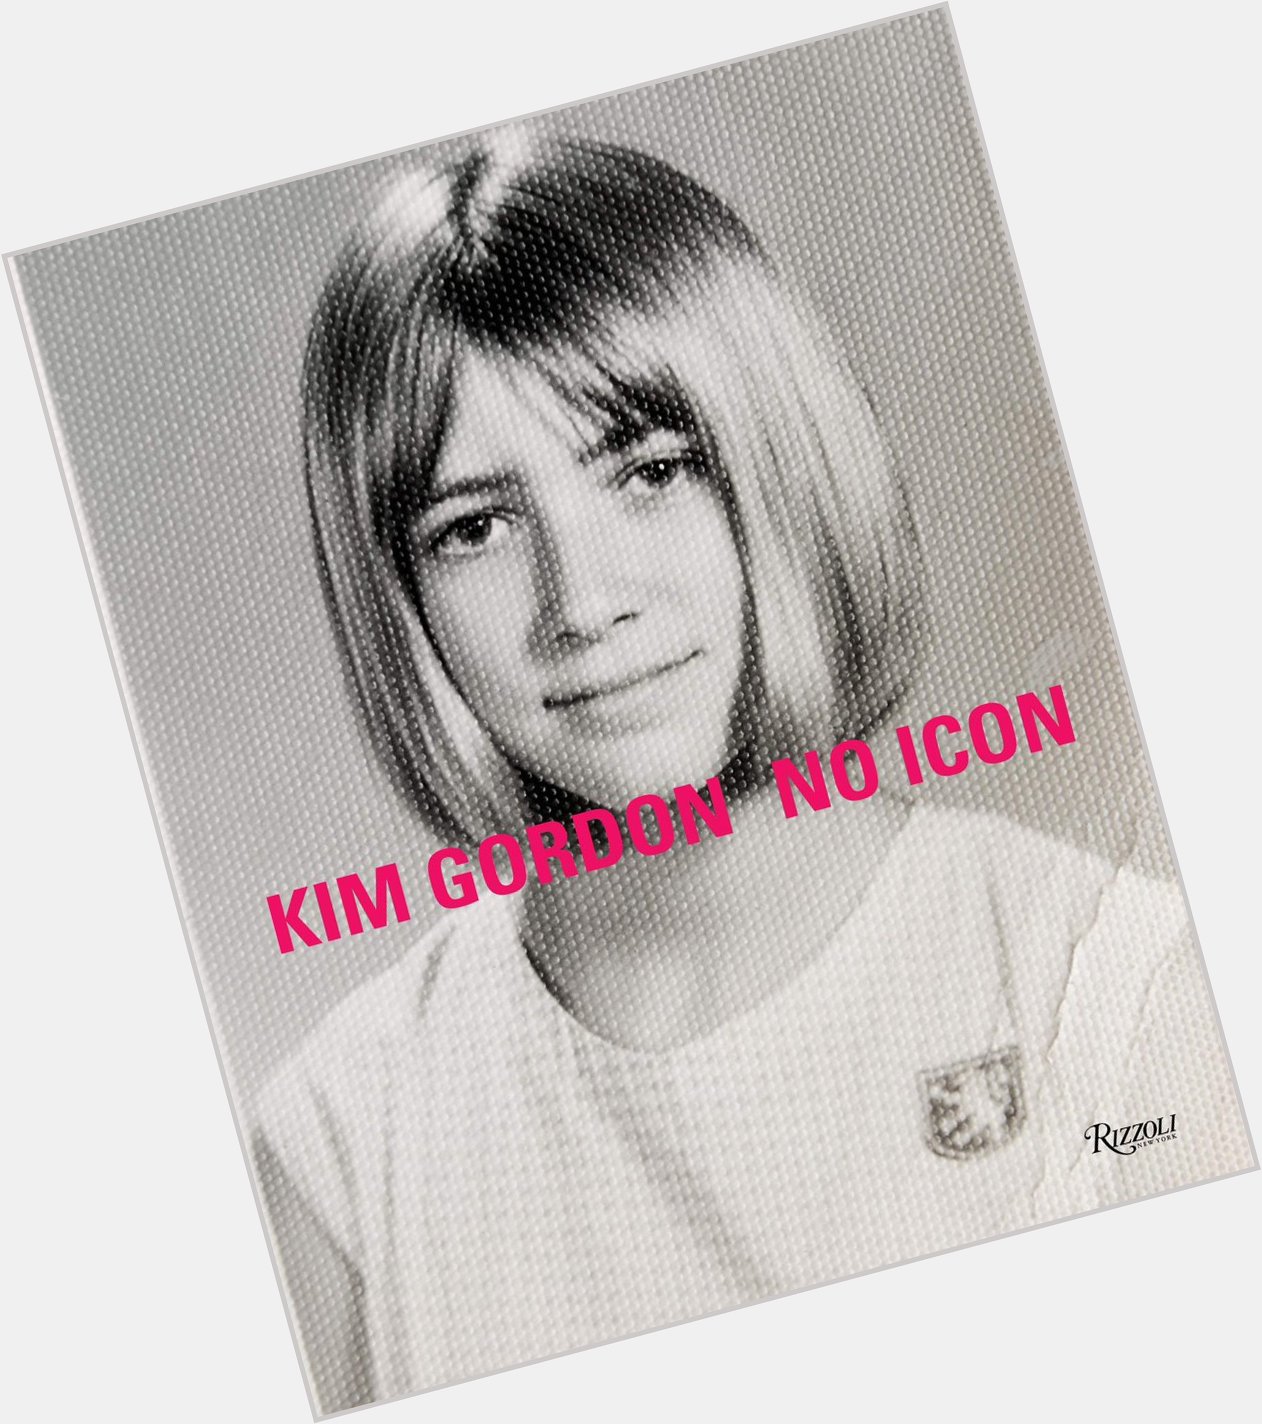 Sonic Youth\s Kim Gordon  vía Happy Bday King  